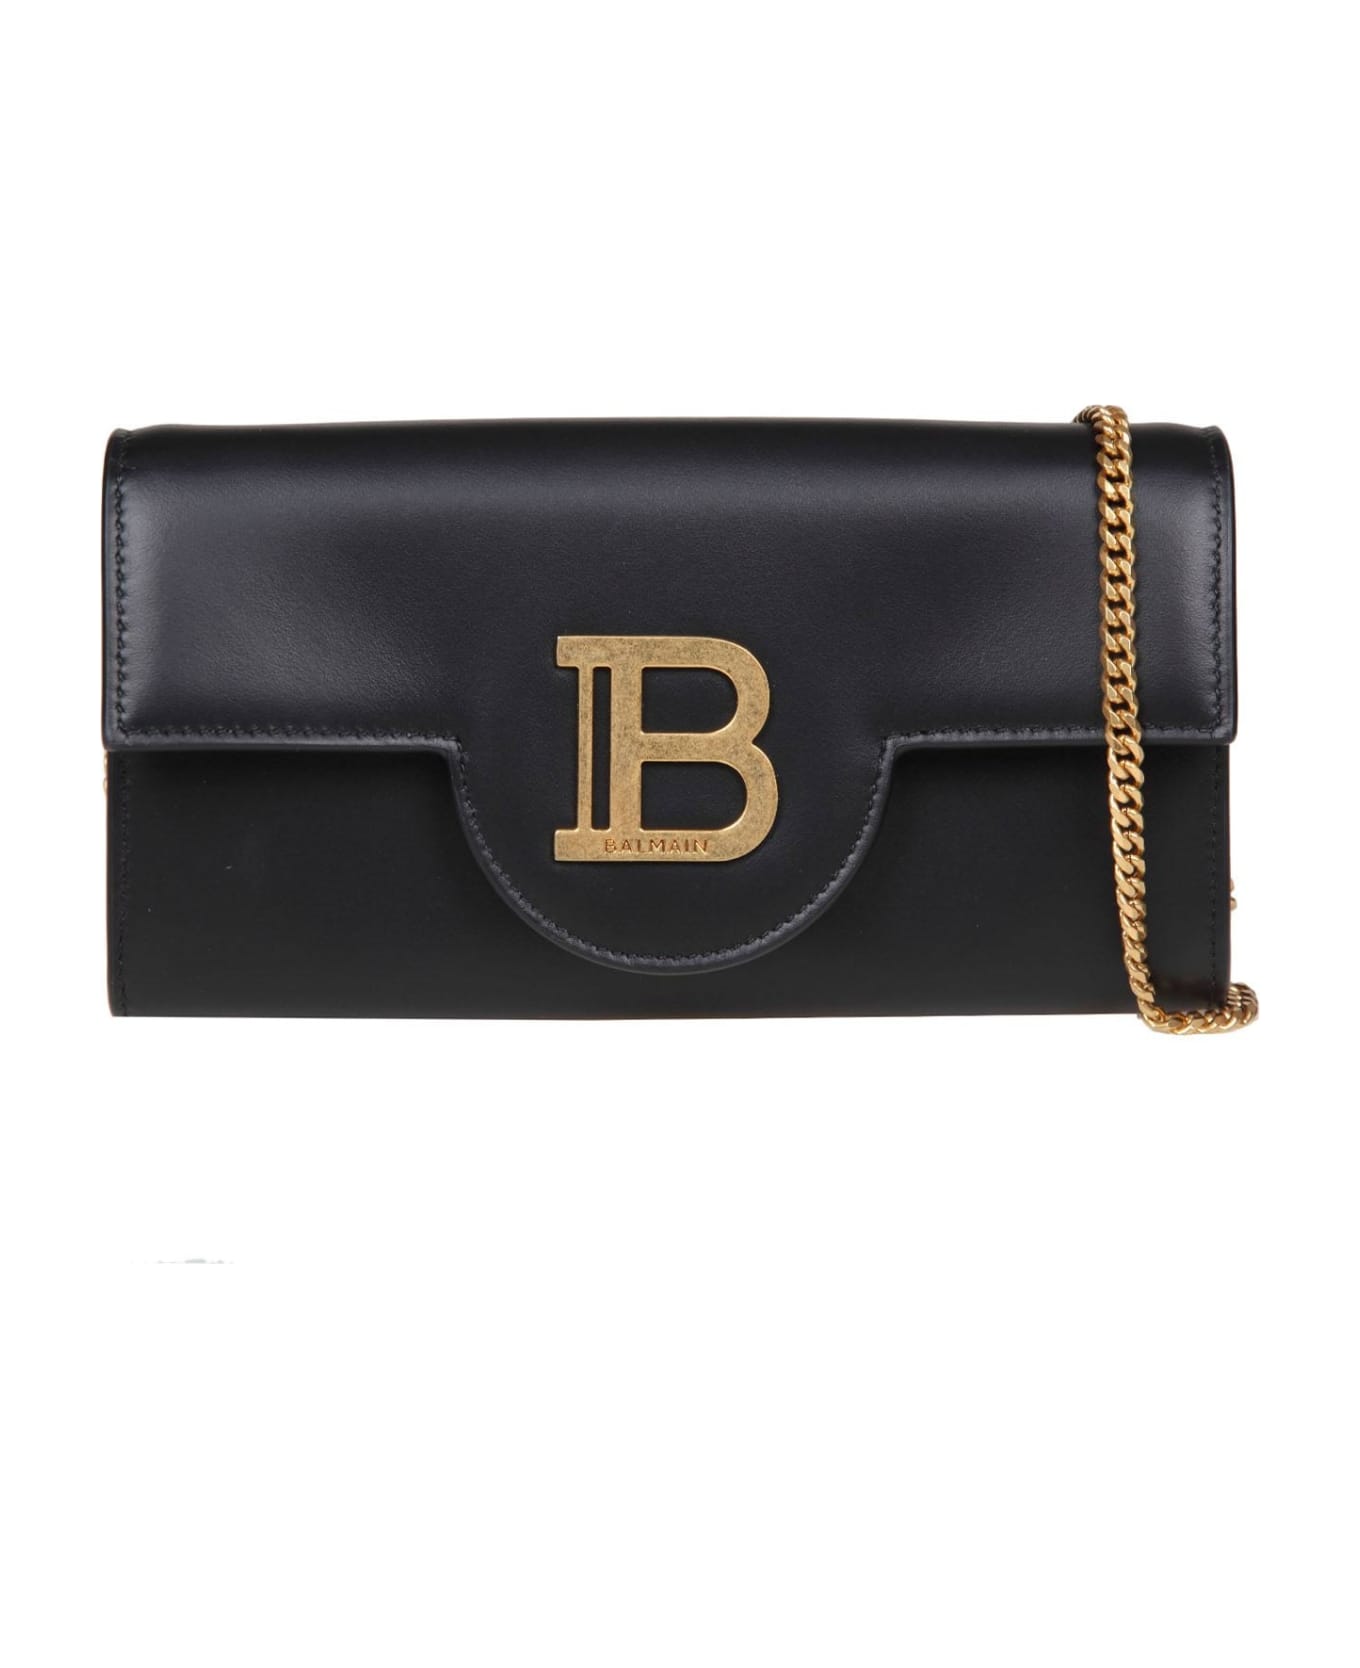 Balmain Buzz Wallet Bag In Black Leather - Black